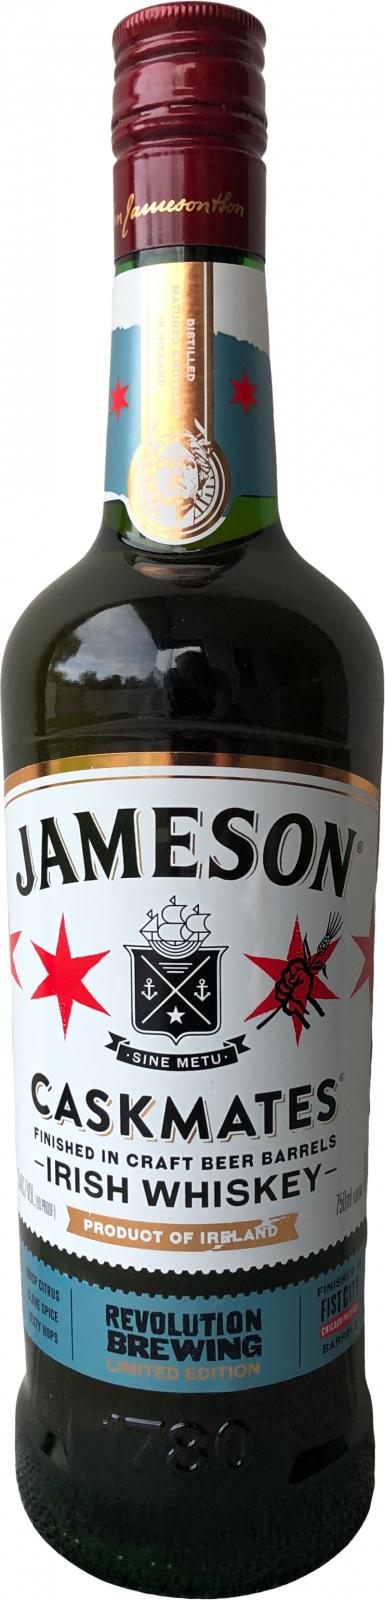 Jameson Caskmates - Revolution Brewing